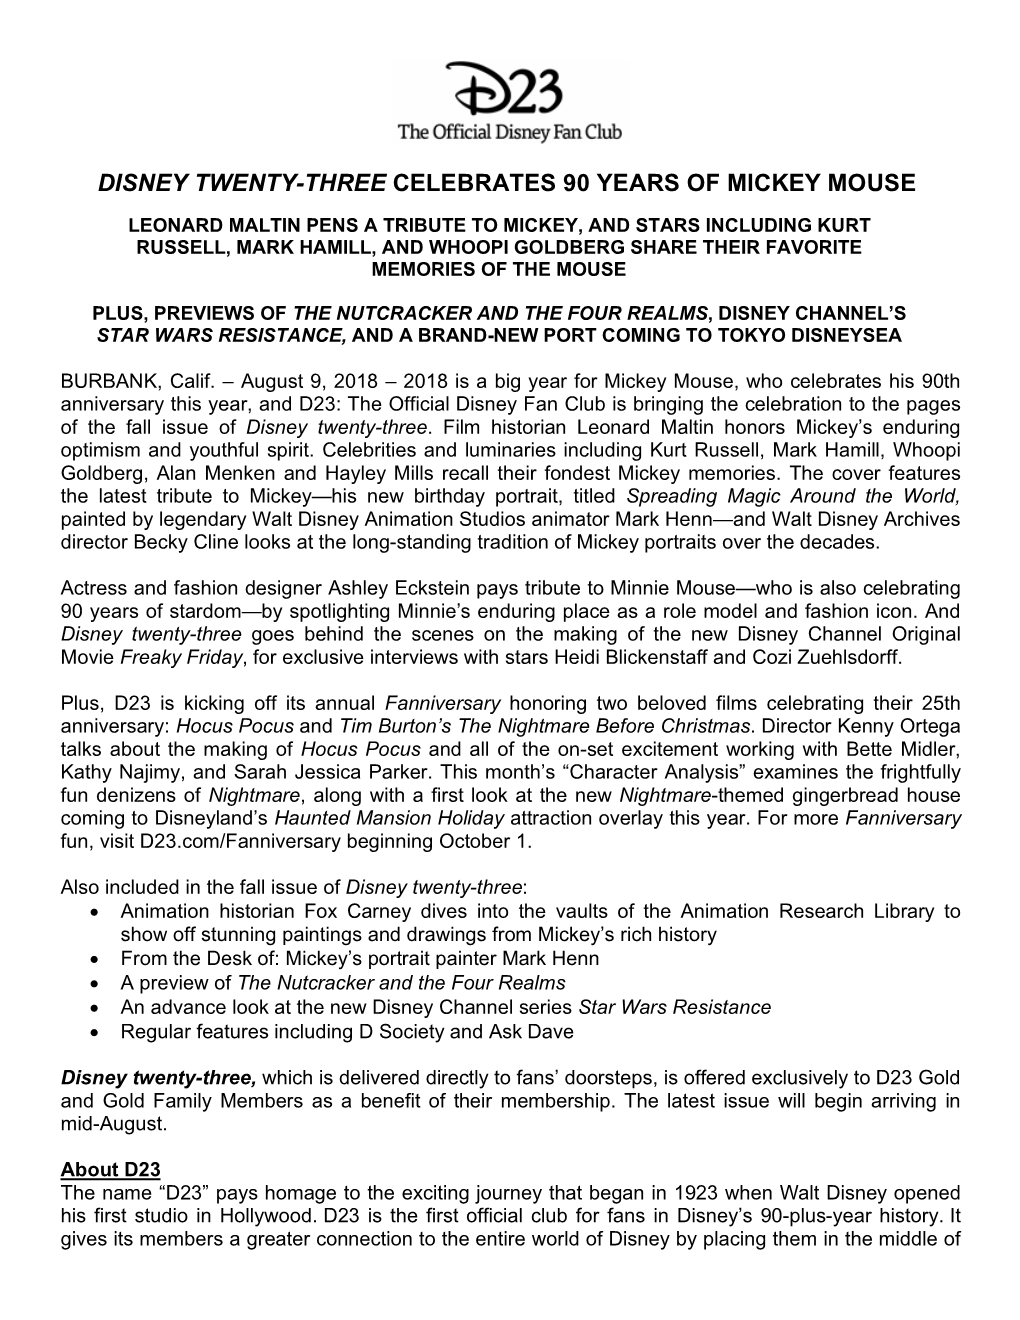 Disney Twenty-Three Celebrates 90 Years of Mickey Mouse